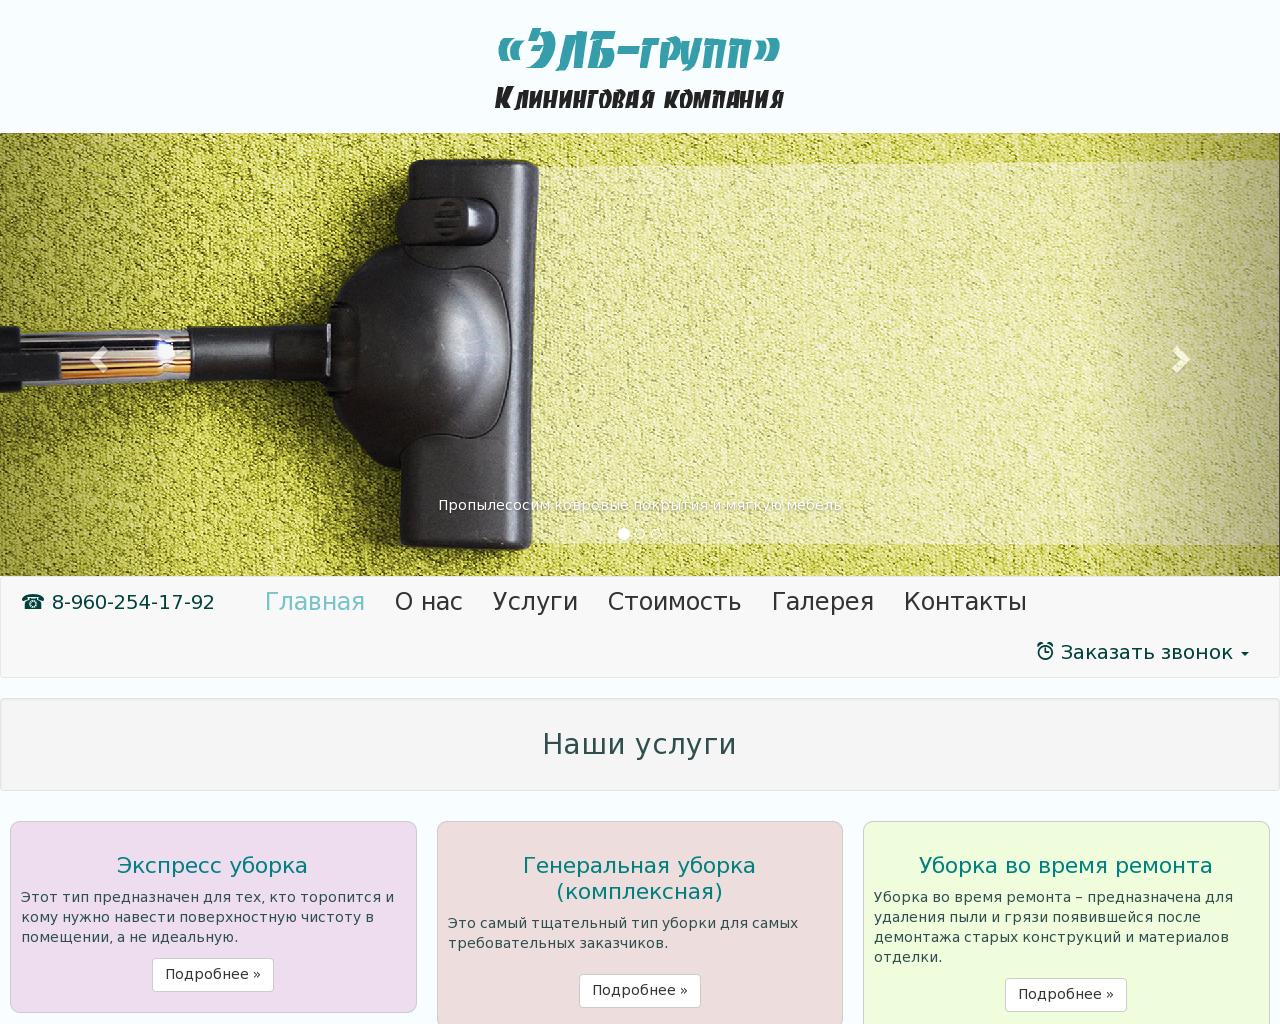 Изображение сайта cleanergood.ru в разрешении 1280x1024